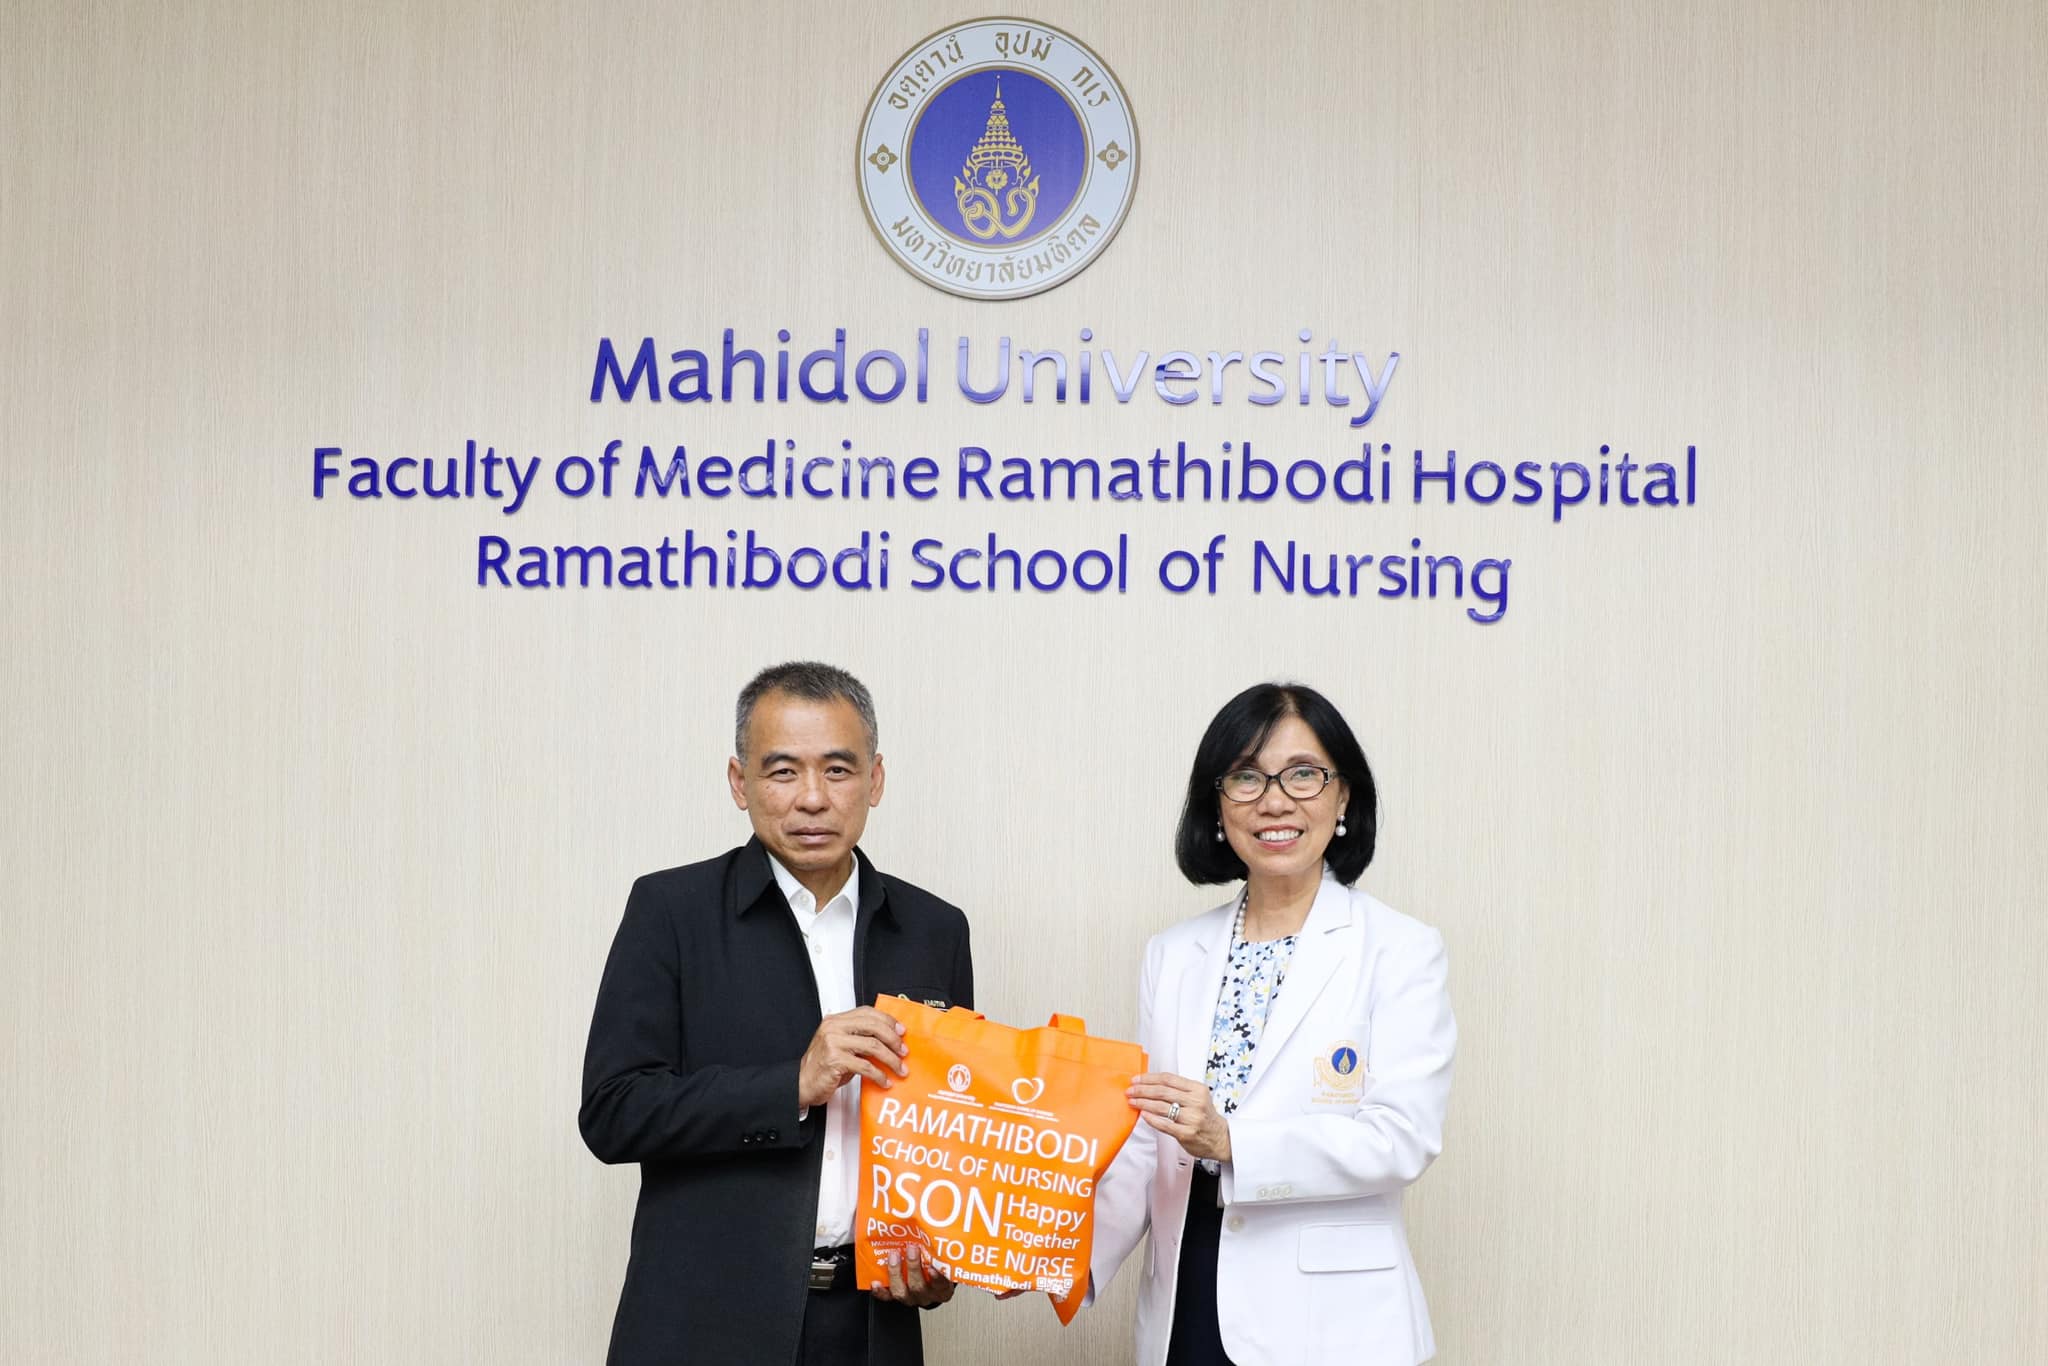 Ramathibodi School of Nursing, Faculty of Medicine Ramathibodi Hospital, Mahidol University, had a collaborative meeting with Faculty of Applied Science, King Mongkut's University of Technology North Bangkok (KMUTNB).